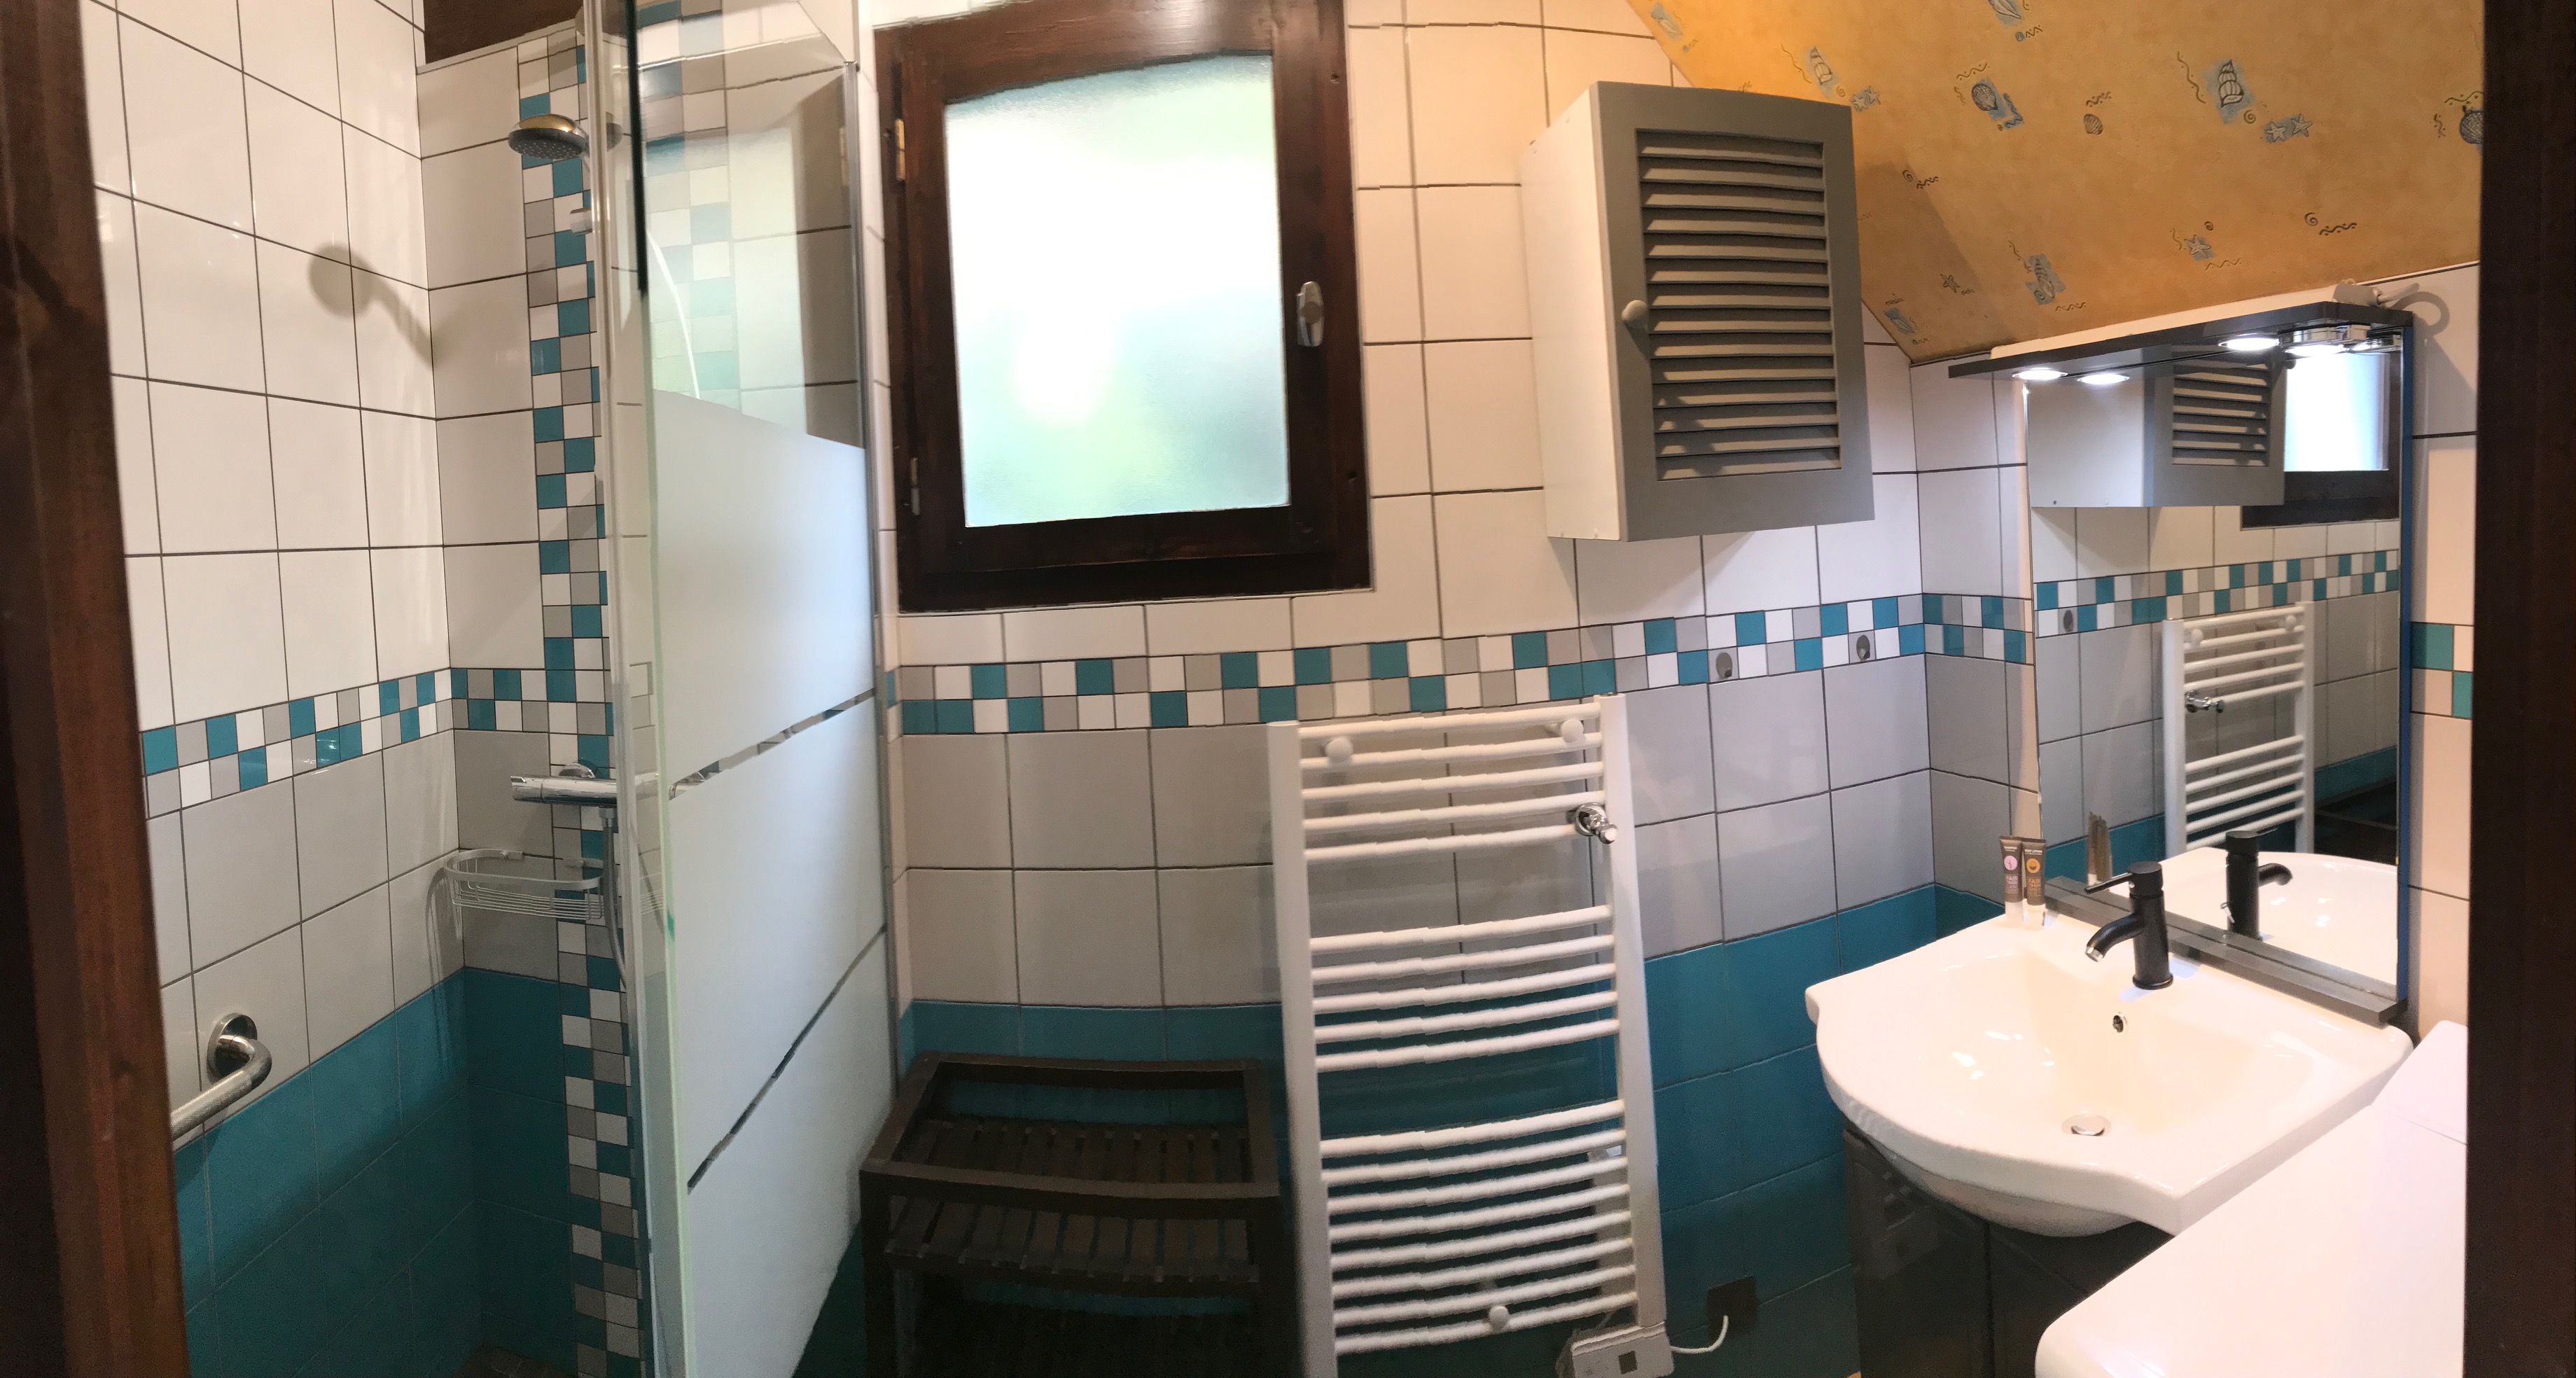 La salle de bain du gîte "Le Gabizos"